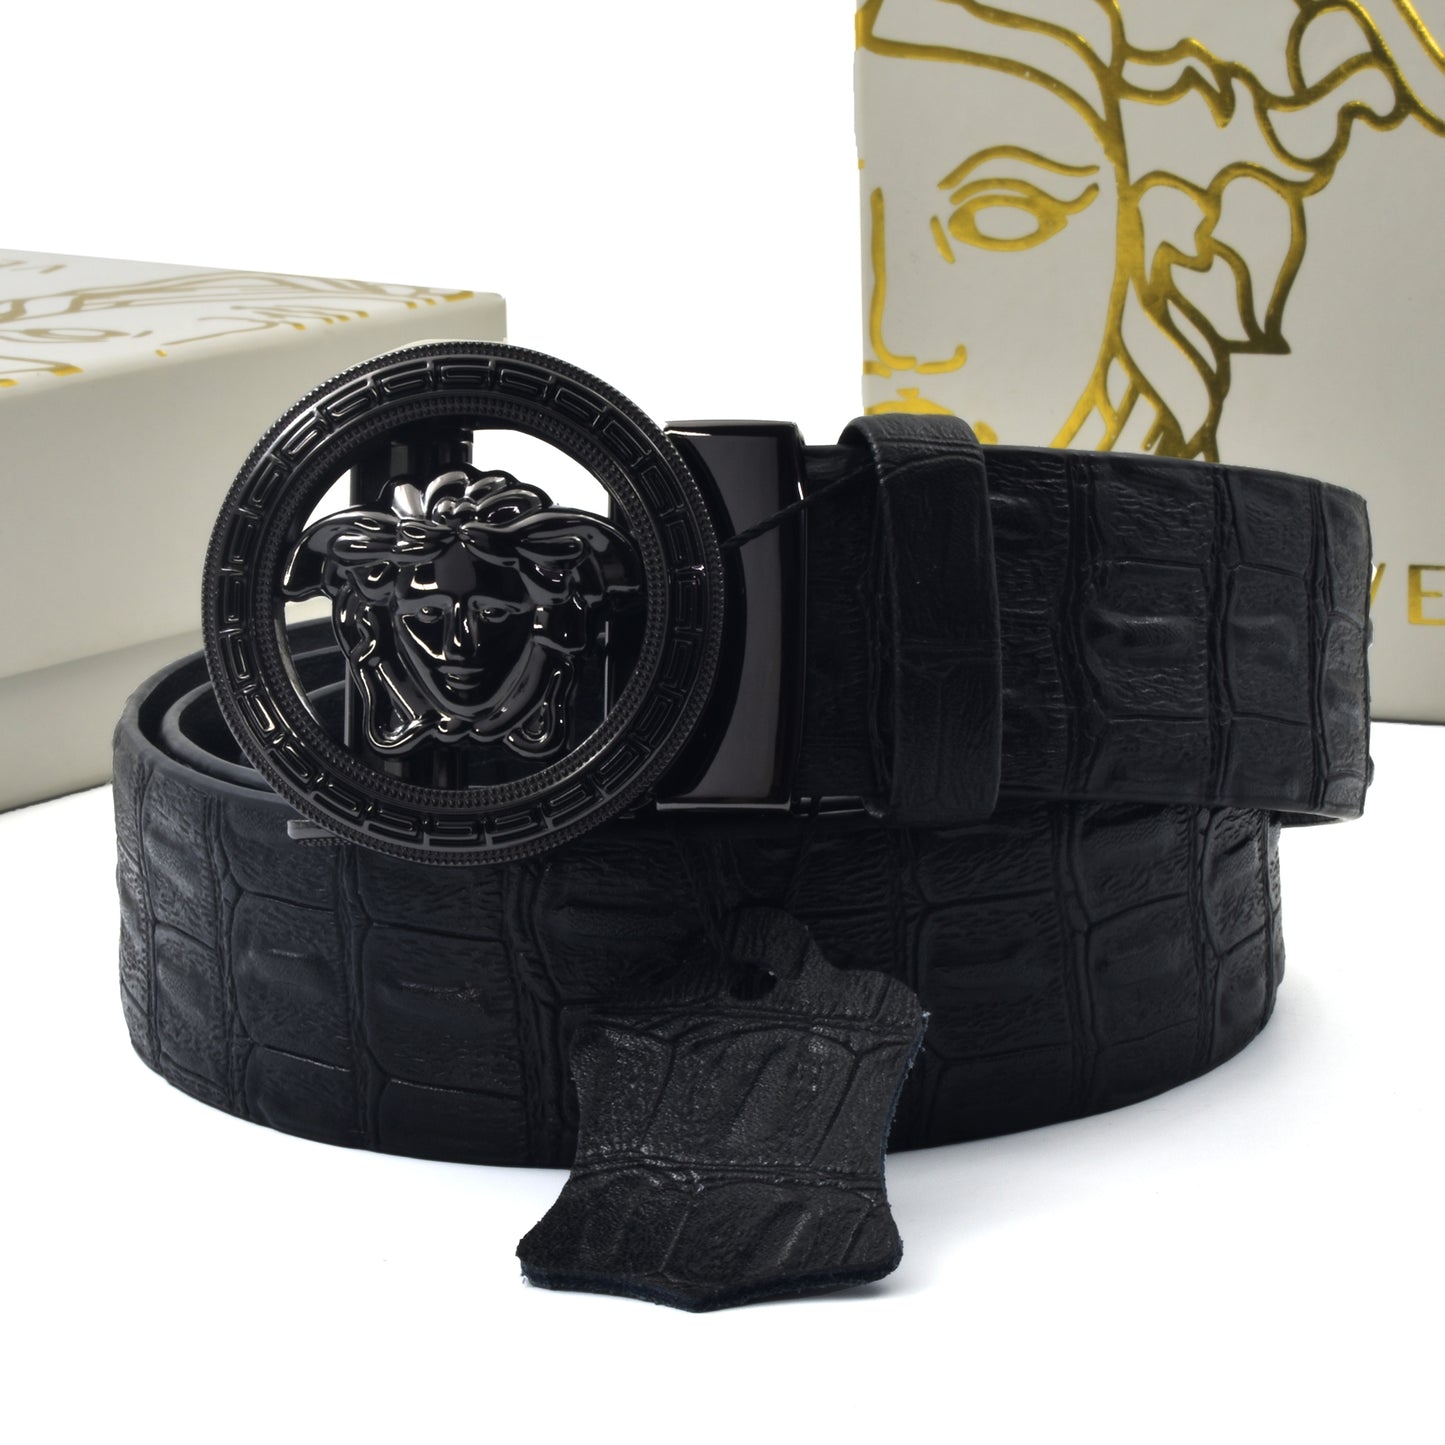 Premium Quality Gear Buckles Belt | VRS Belt 1003